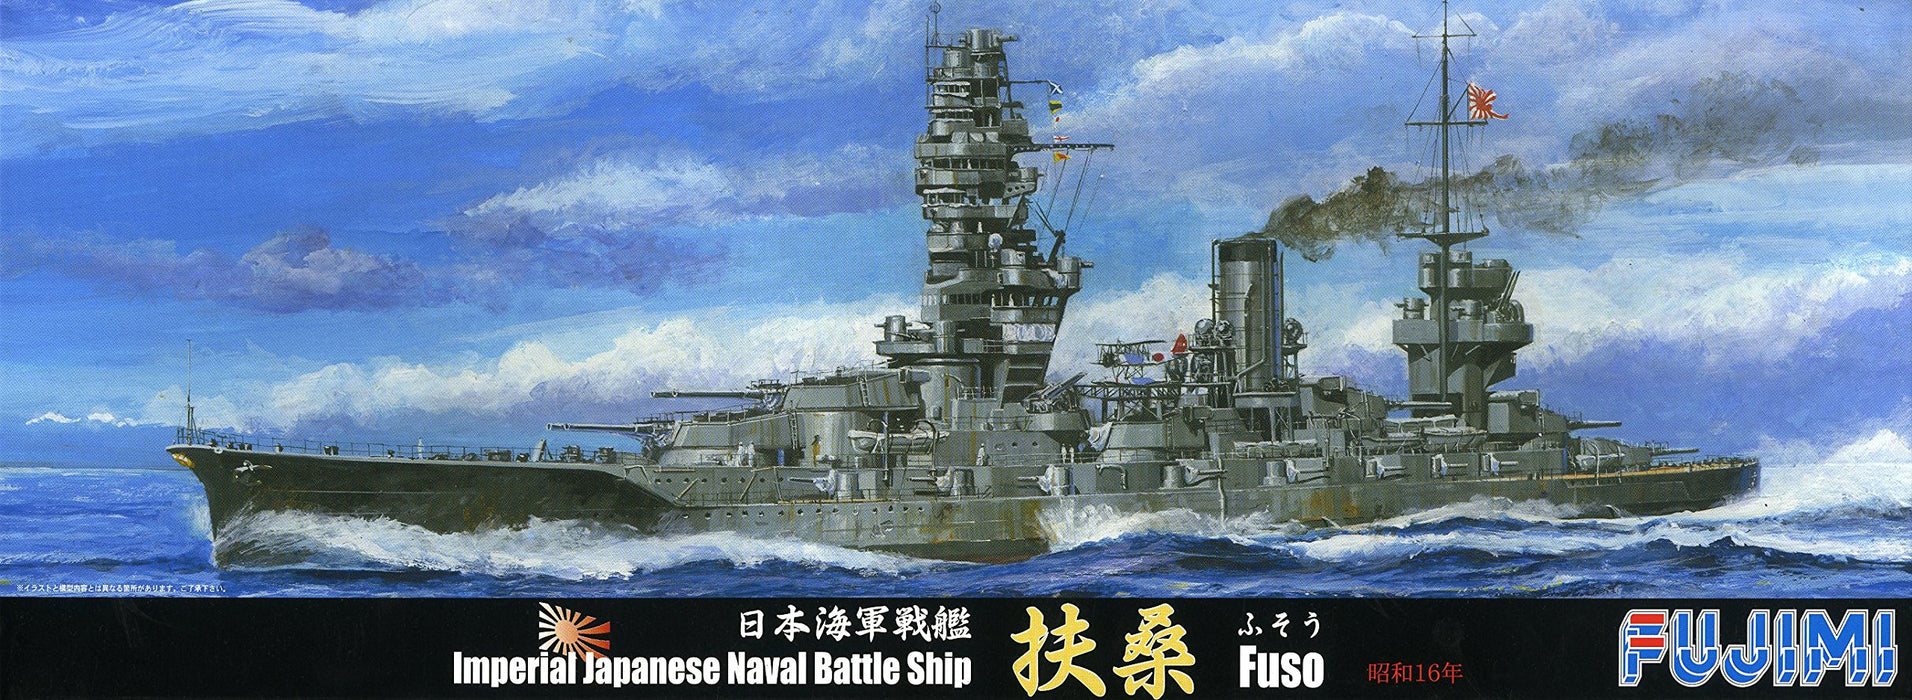 FUJIMI Toku-66 Ijn Imperial Japanese Naval Battle Ship Fuso 1941 Kit à l'échelle 1/700